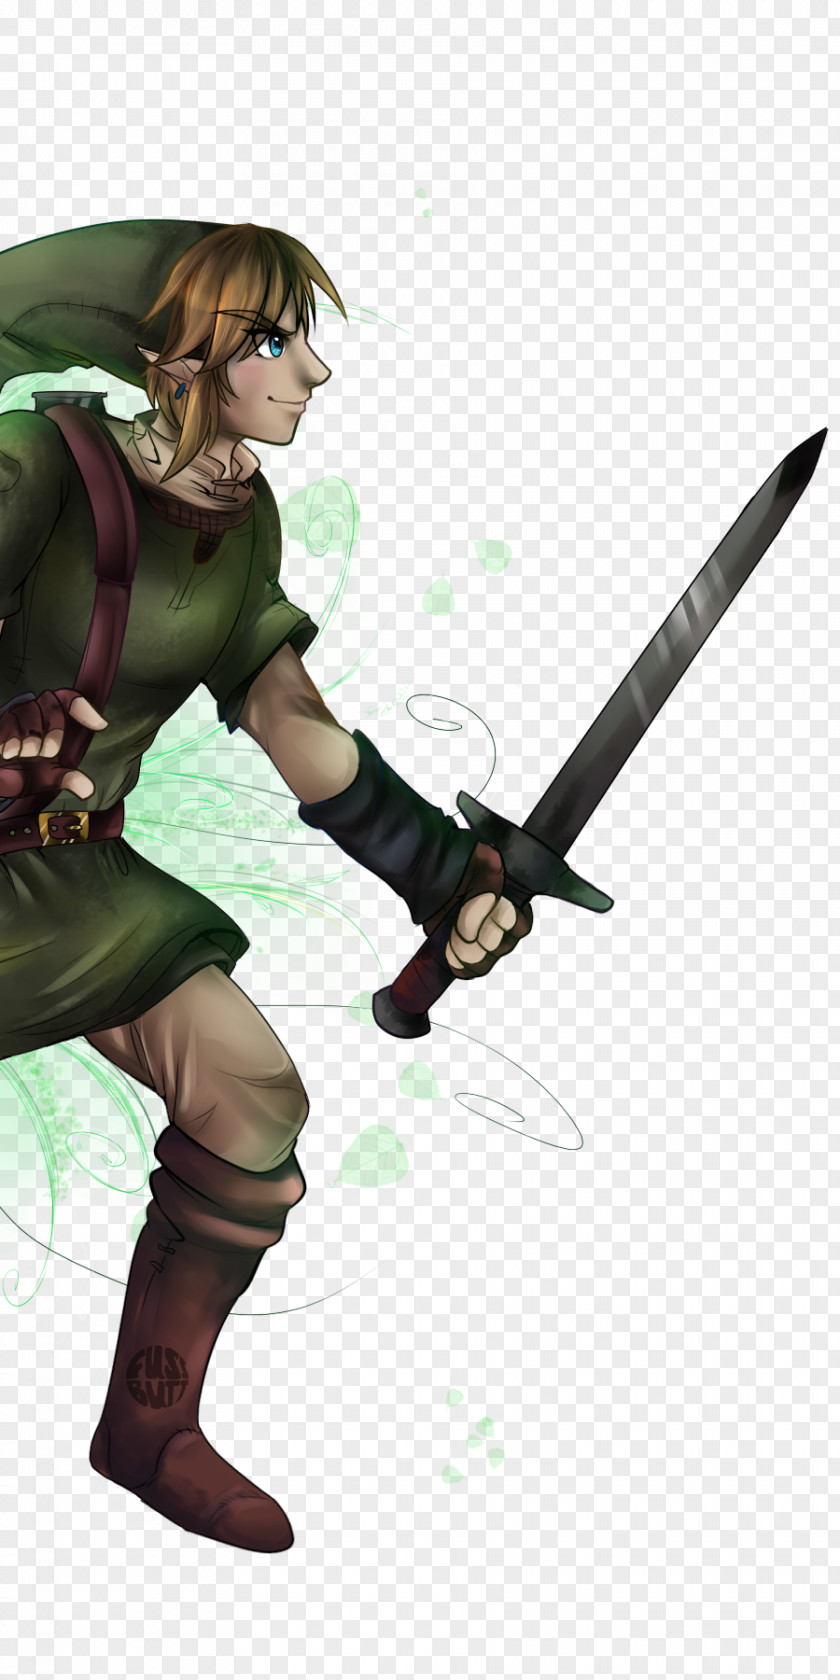 Lnk Painting Line Art The Legend Of Zelda: Skyward Sword DeviantArt PNG